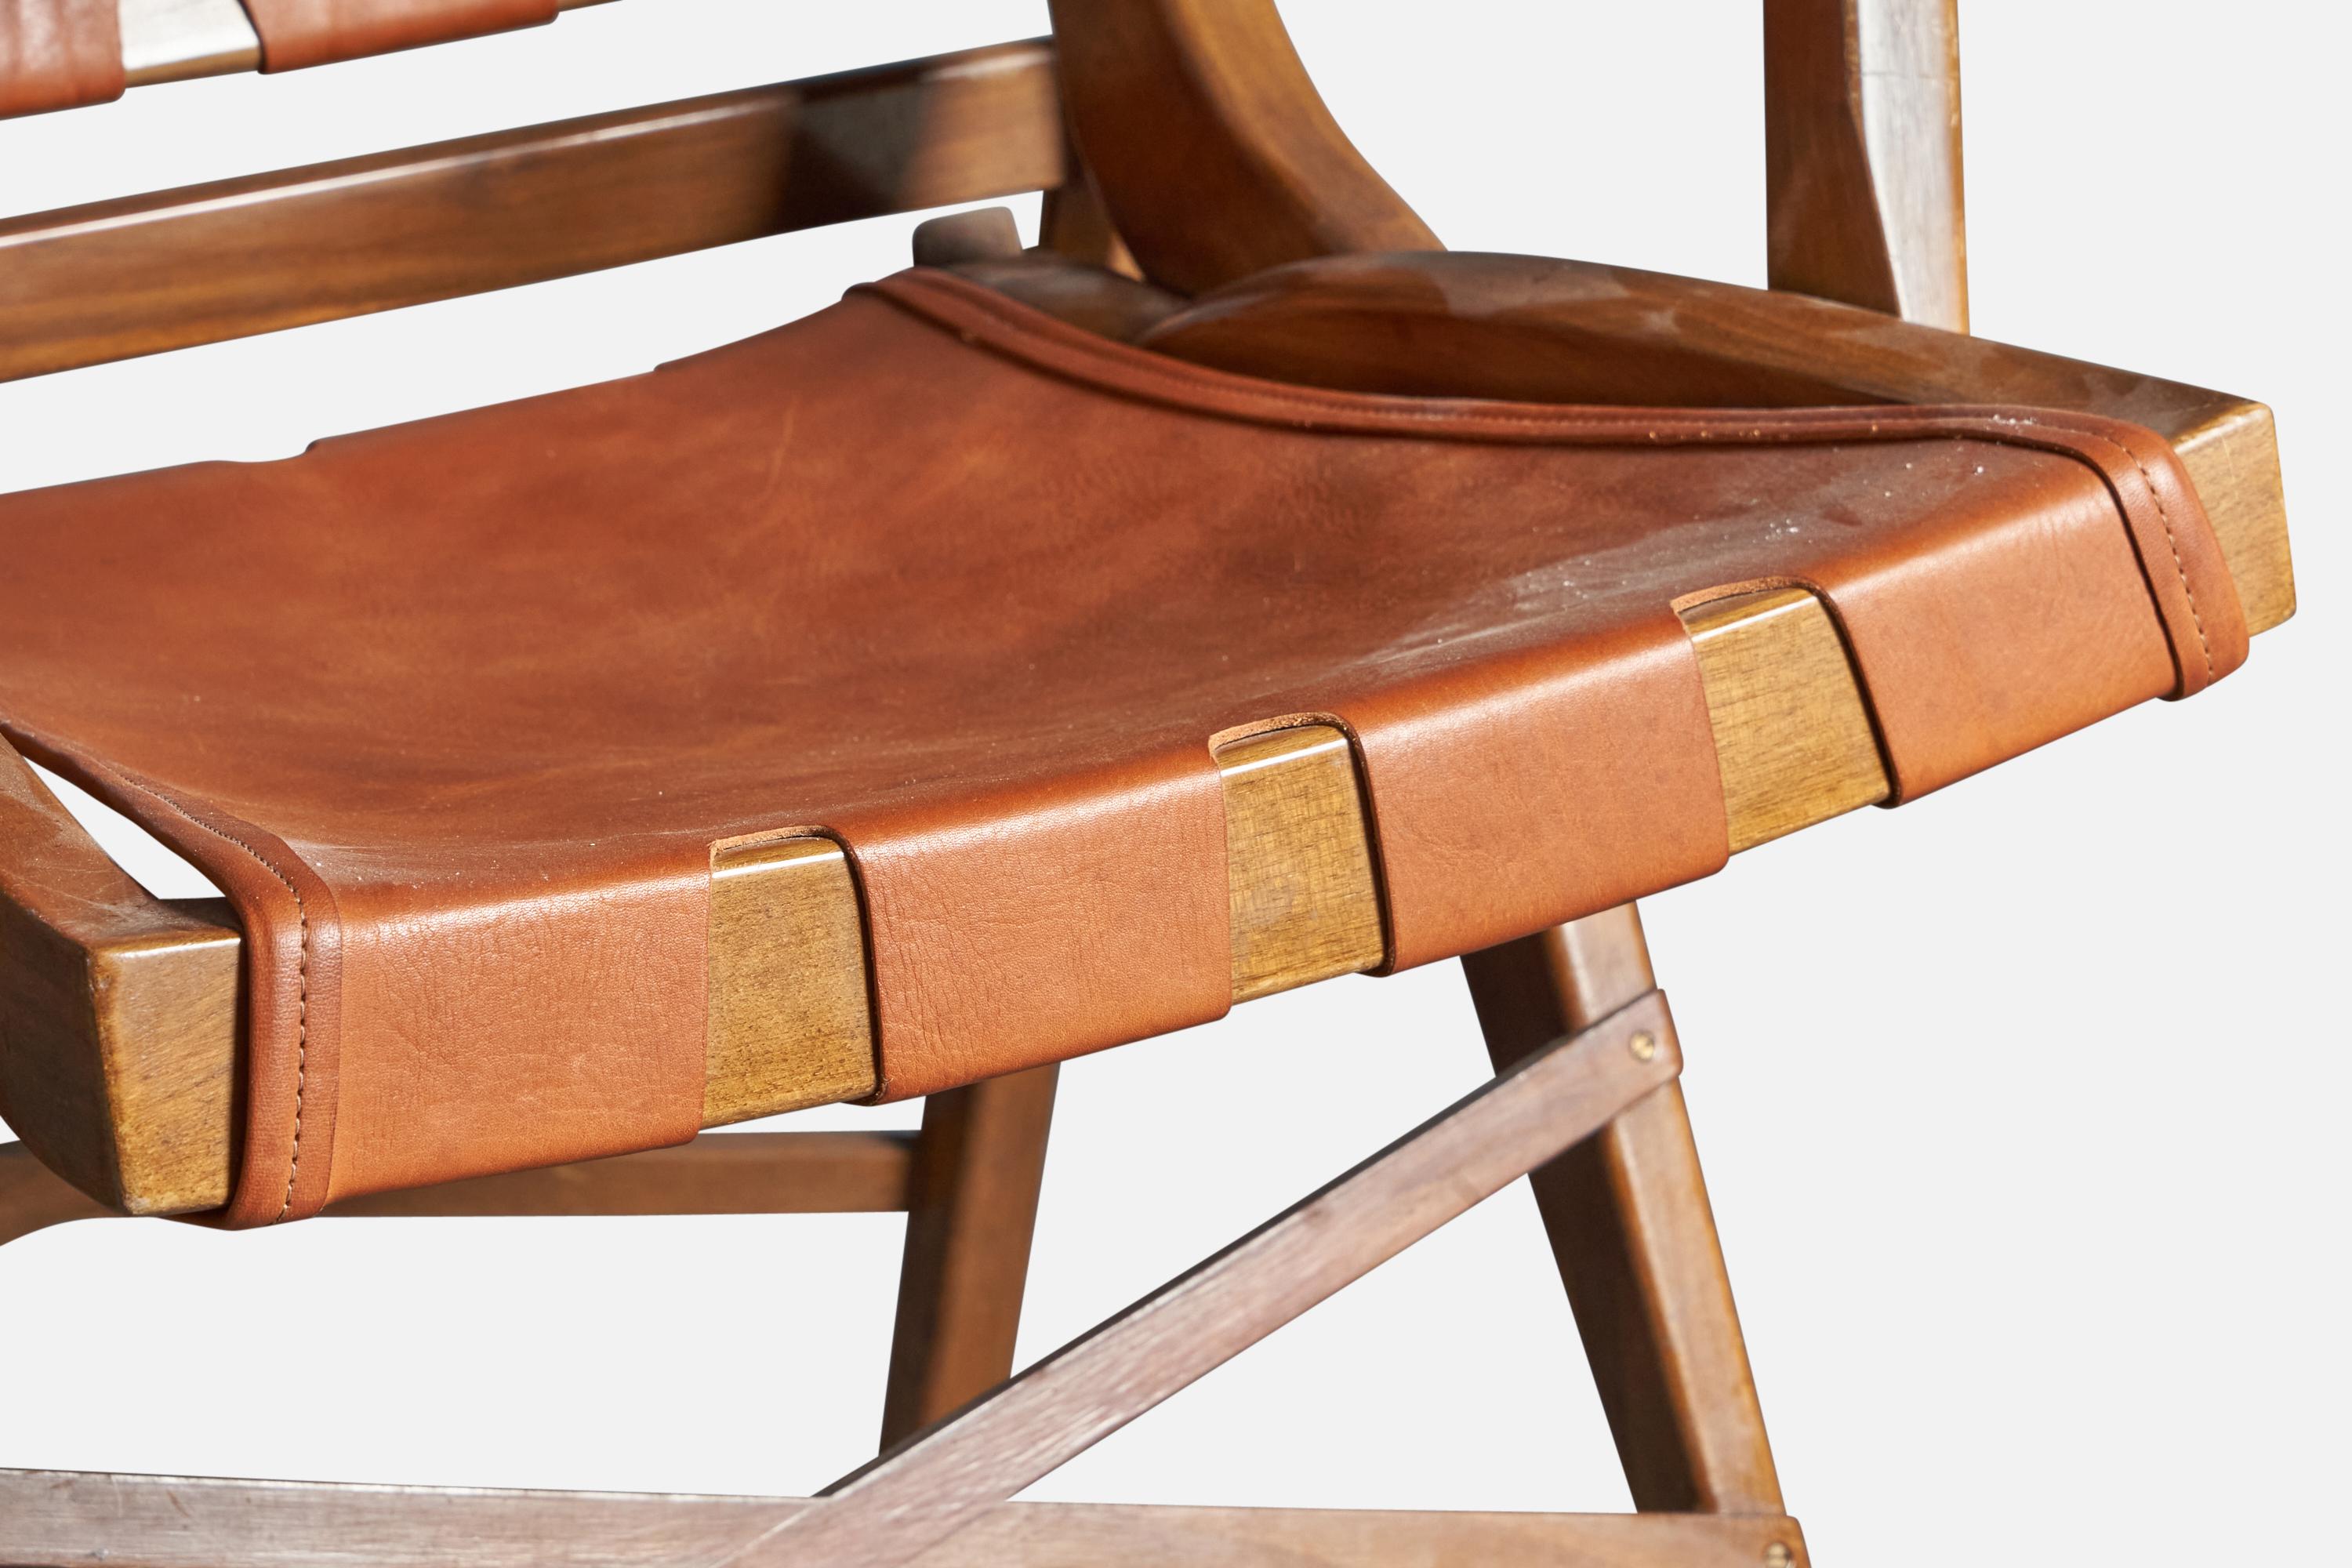 Italian Guglielmo Pecorini, Folding Arm Chairs, Walnut, Leather, Italy, 1940s